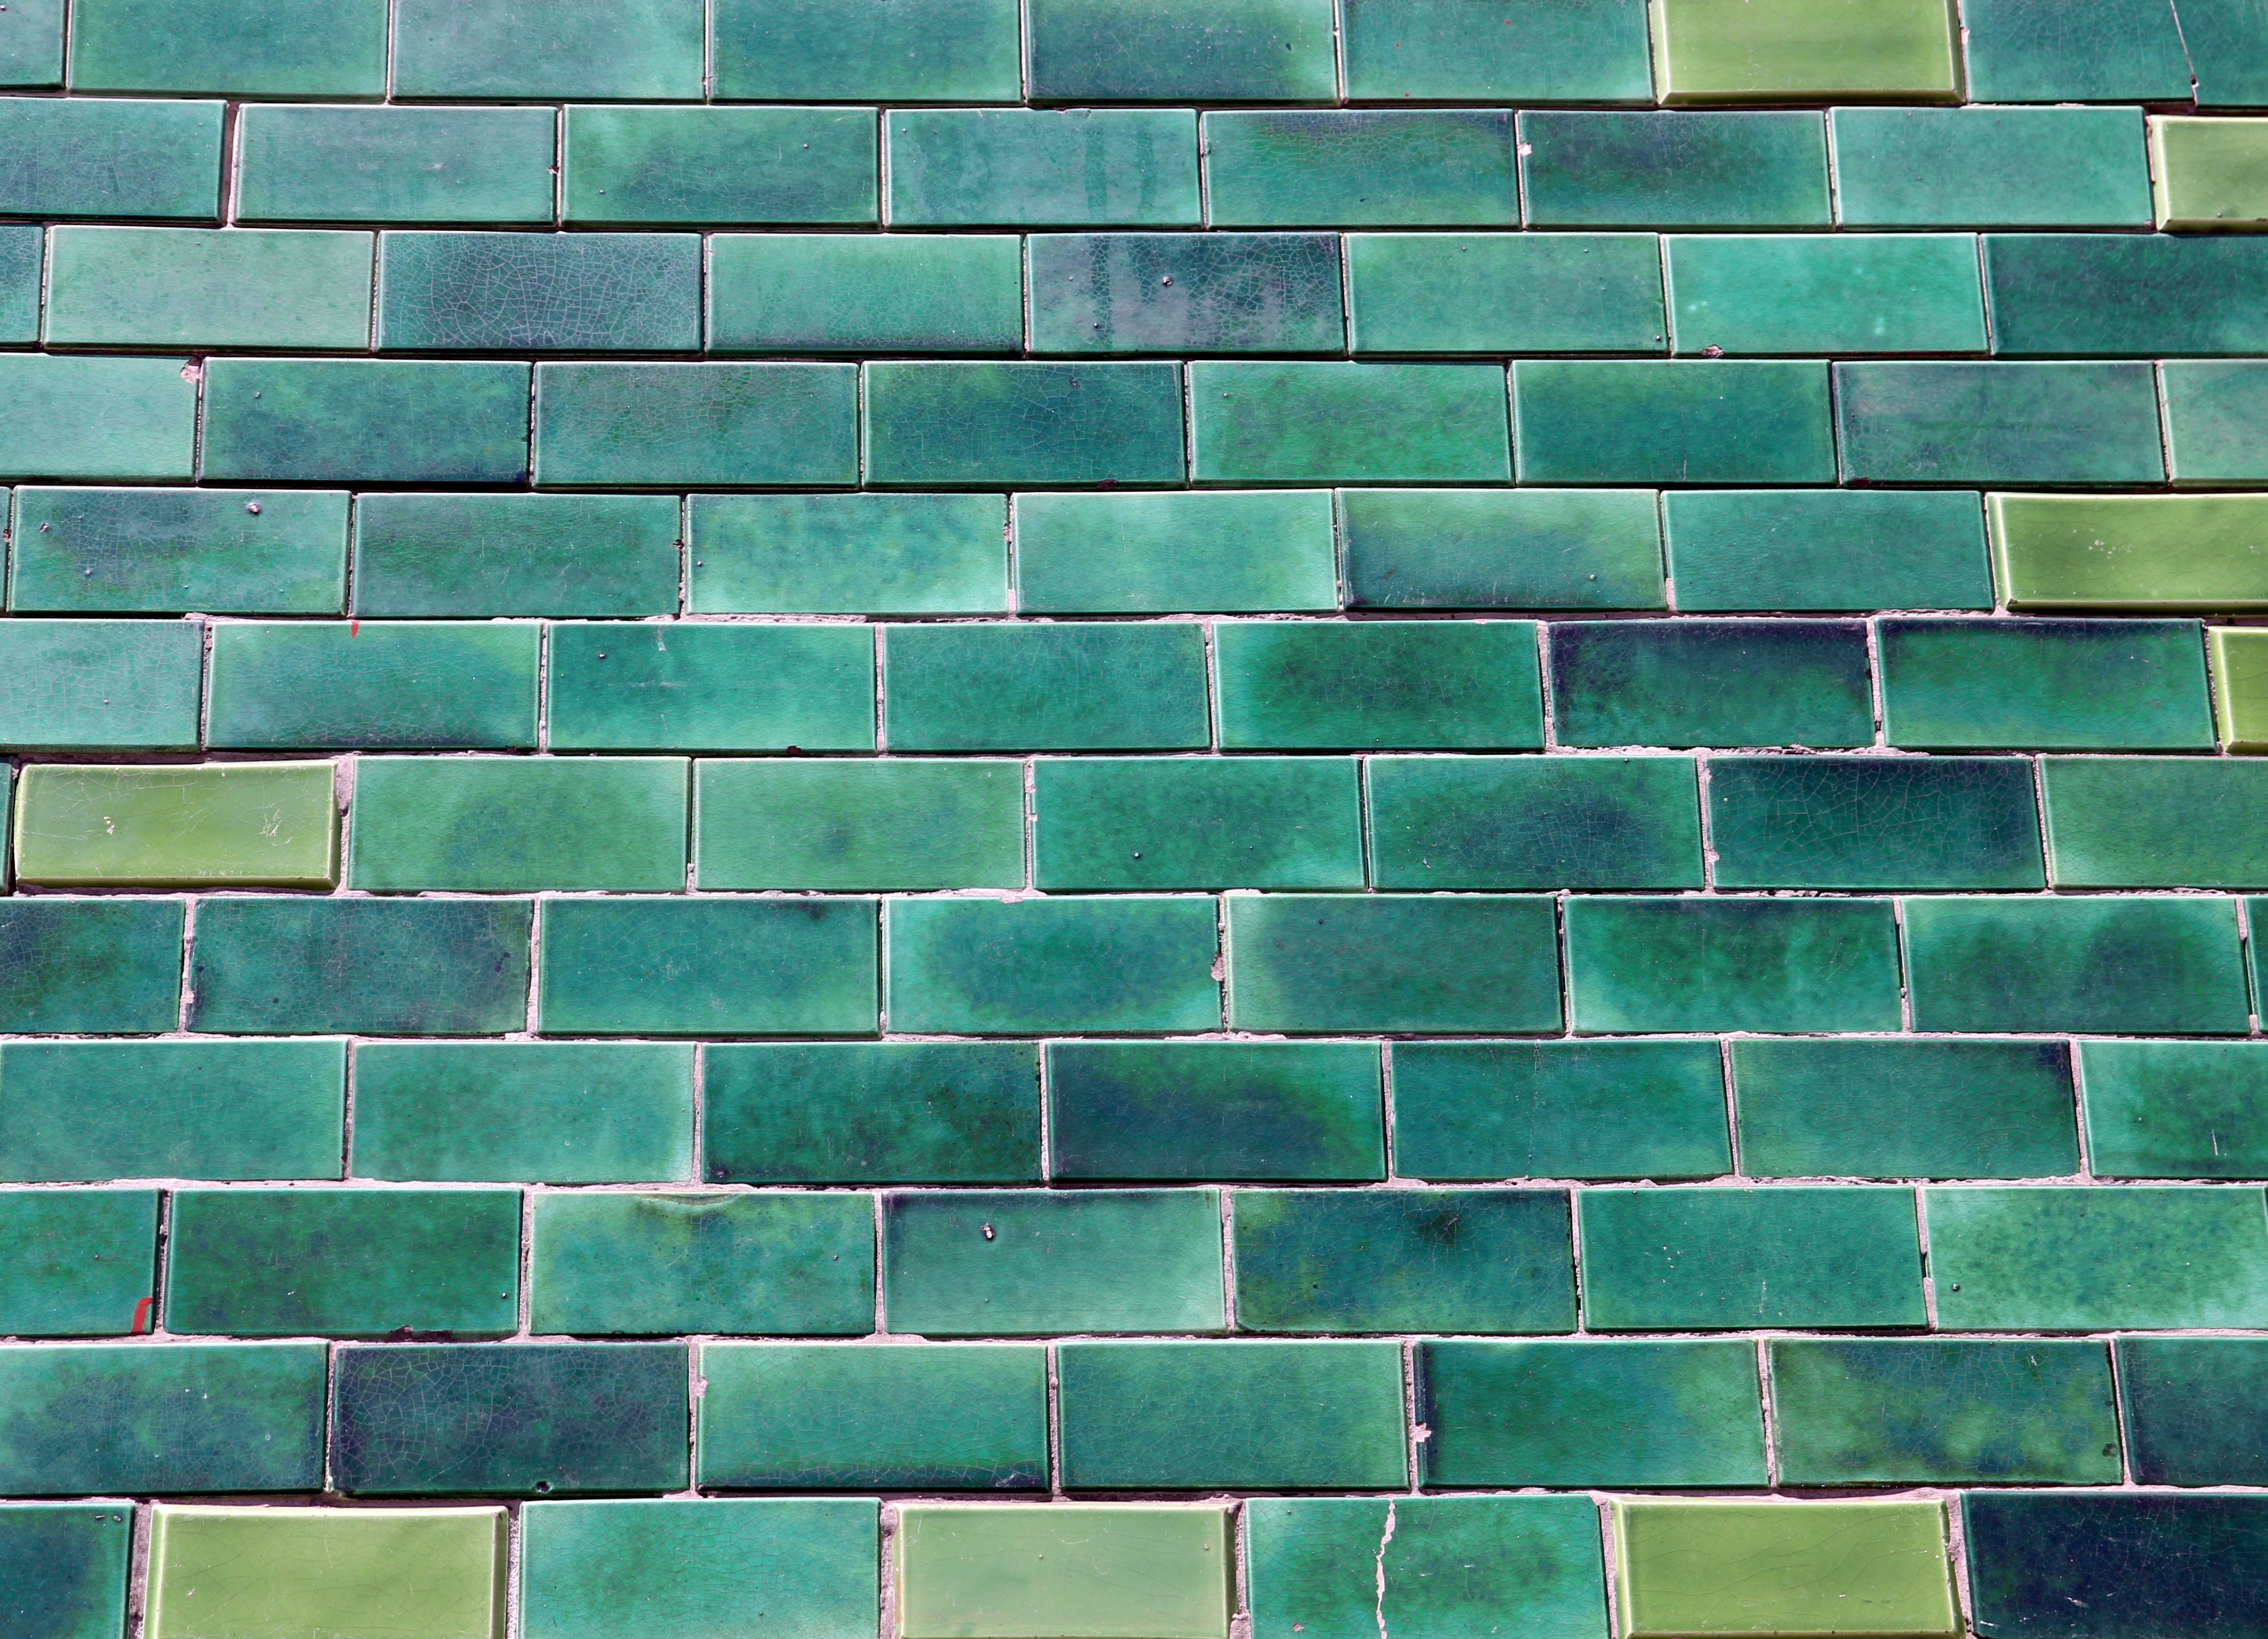 green brick wallpaper,wall,brickwork,brick,green,turquoise